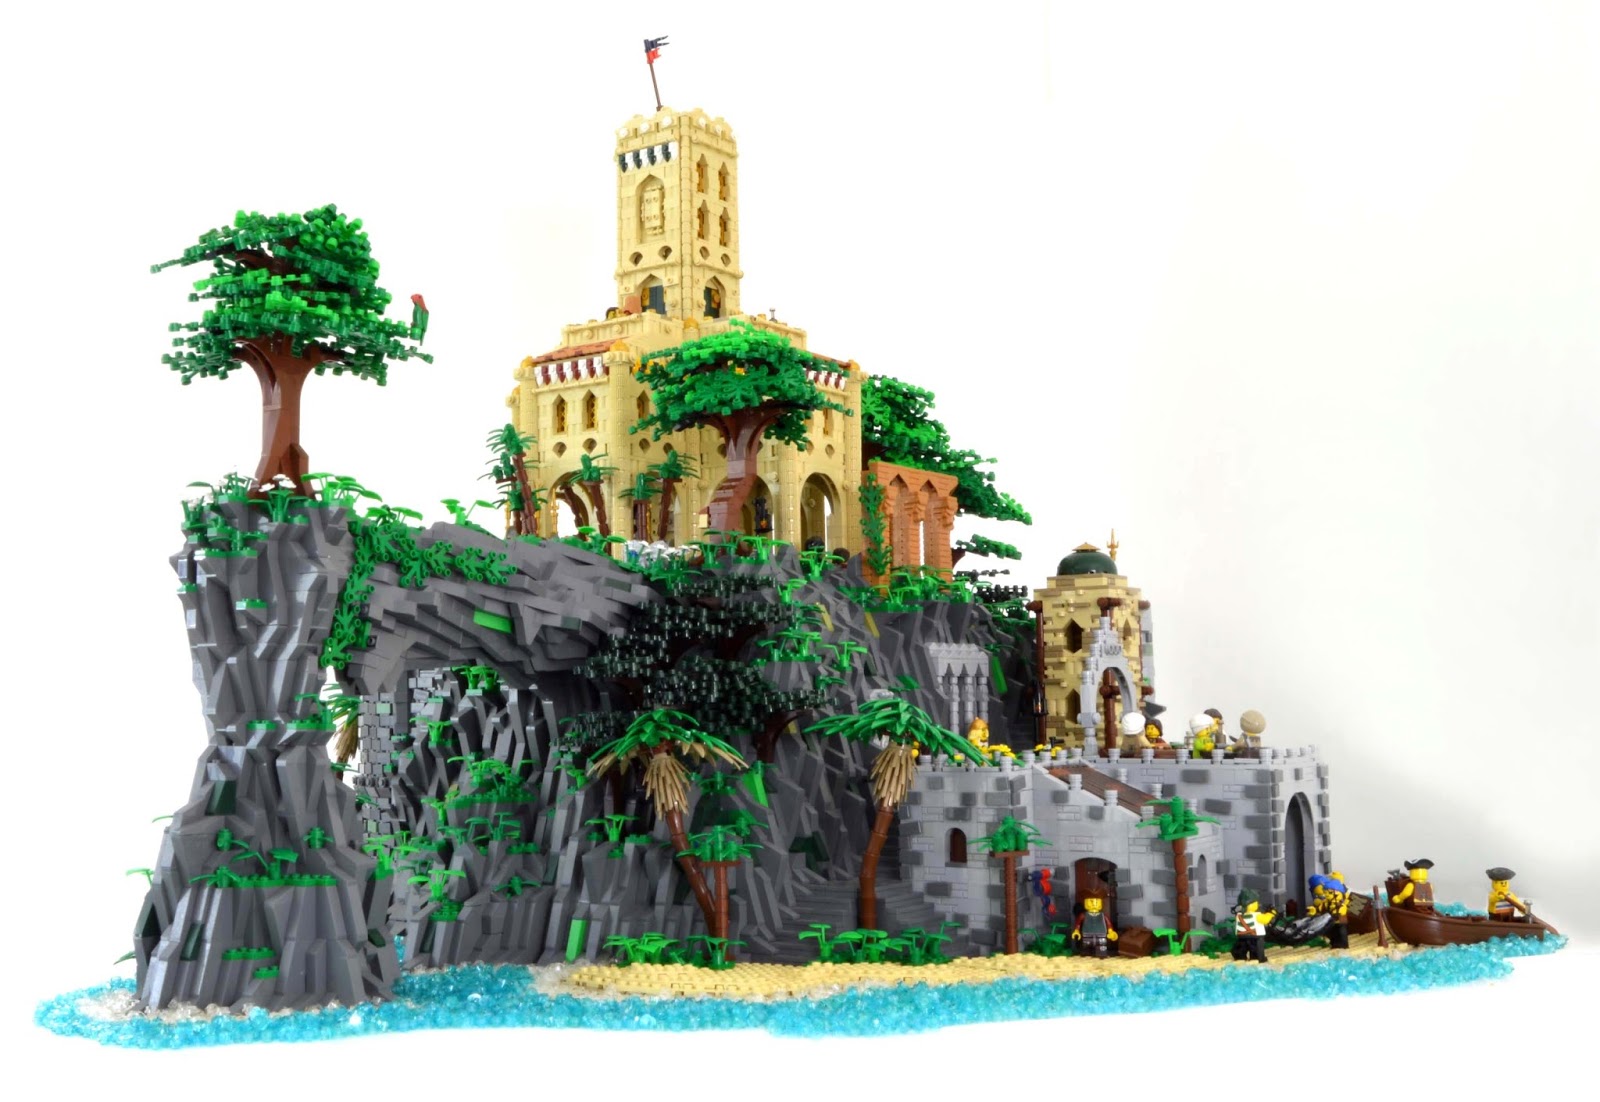 LEGO MOC Mosaic - Stone Island LOGO - LEGO Art by Firemodels